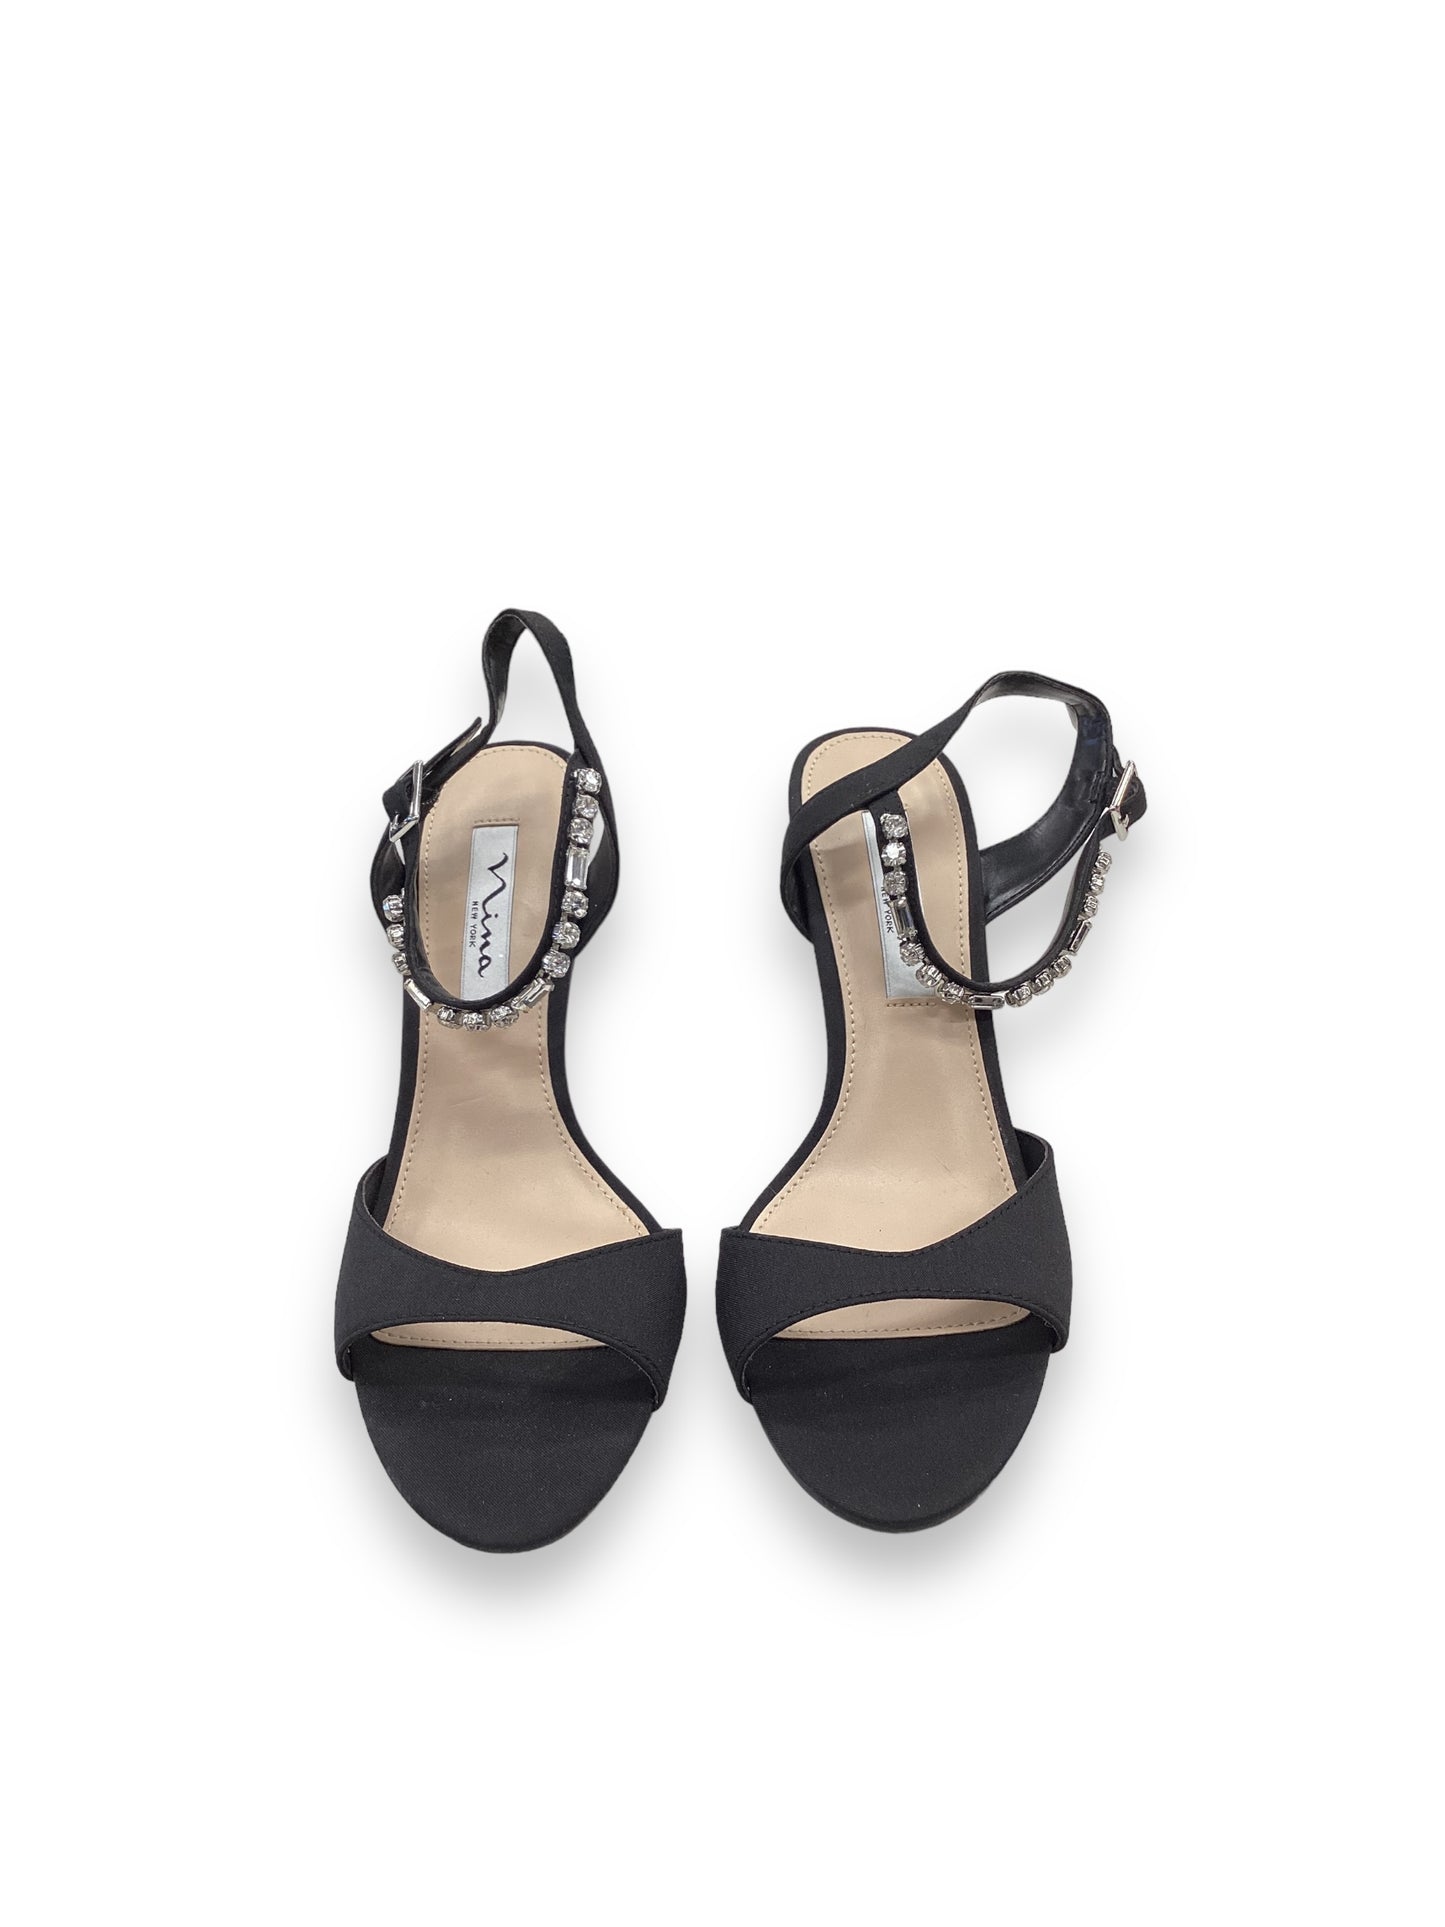 Sandals Heels Stiletto By Nina  Size: 7